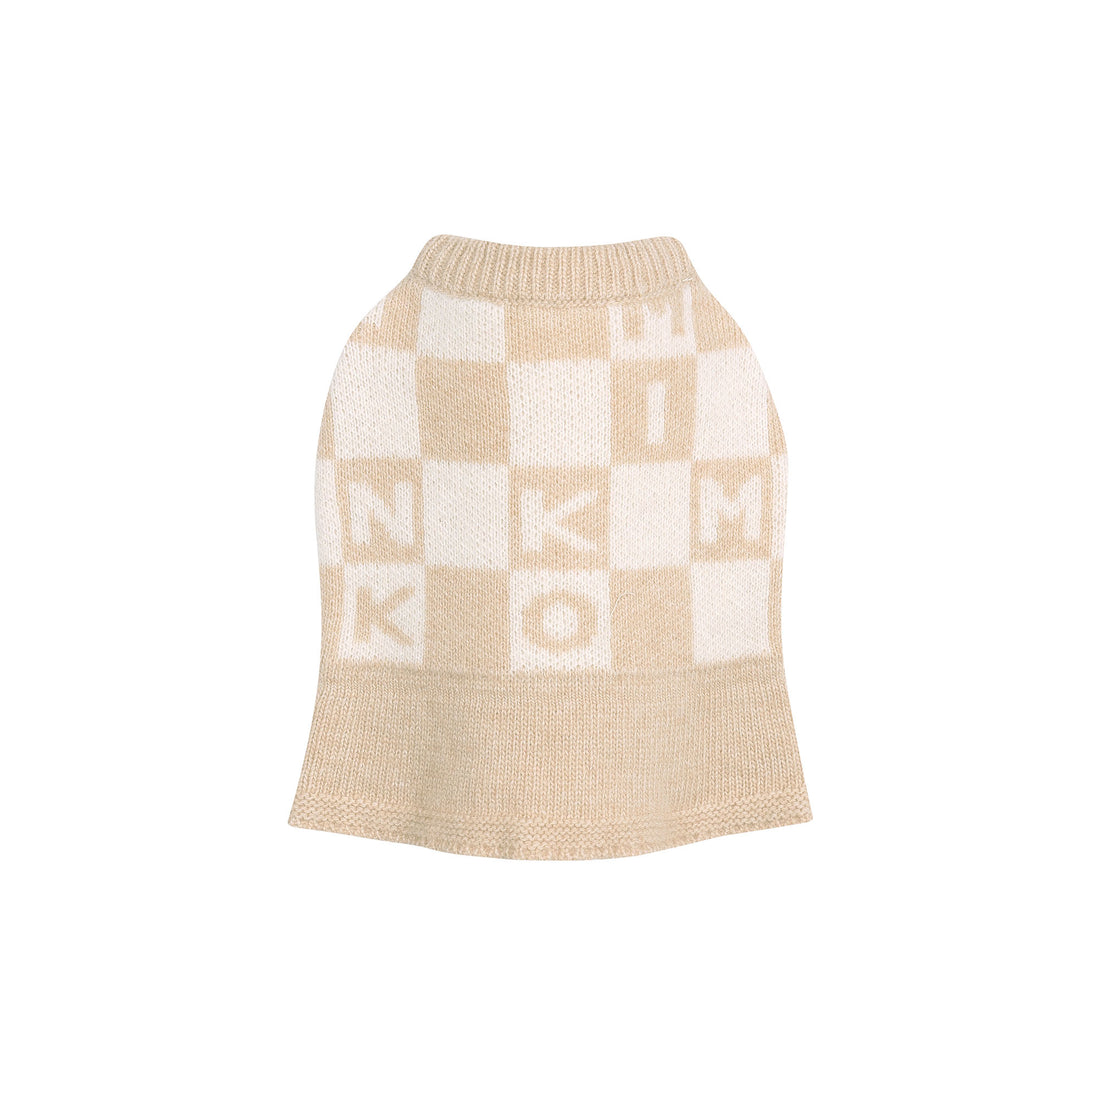 Miminko Checkered Dress - Beige